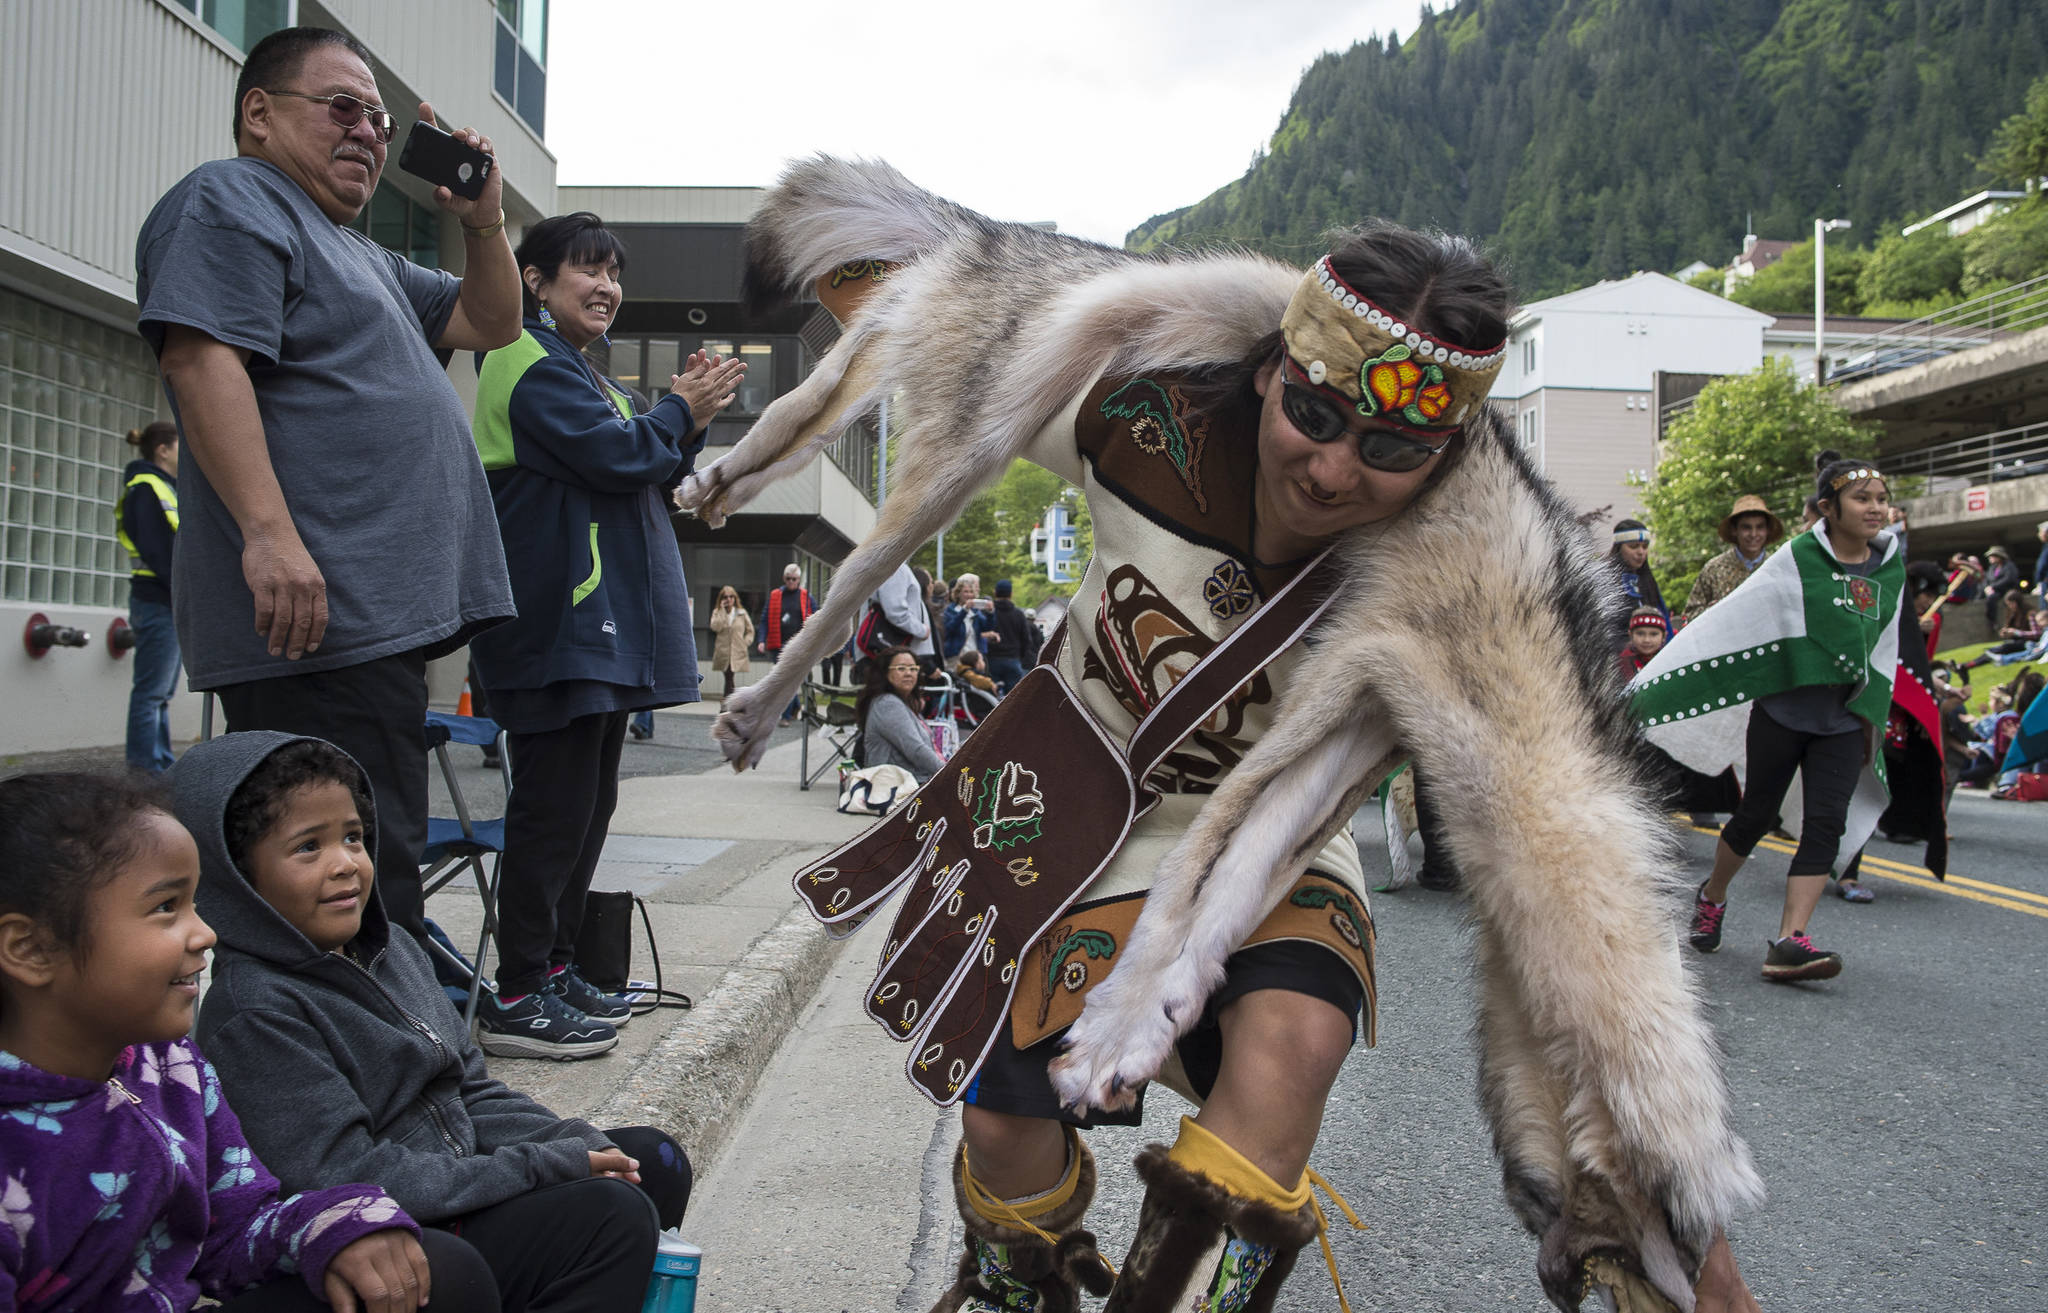 Morgan Fawcett of Woosh.ji.een of Juneau dances in the Grand Entrance for Celebration 2018 along Willoughby Avenue on Wednesday, June 6, 2018. (Michael Penn | Juneau Empire)